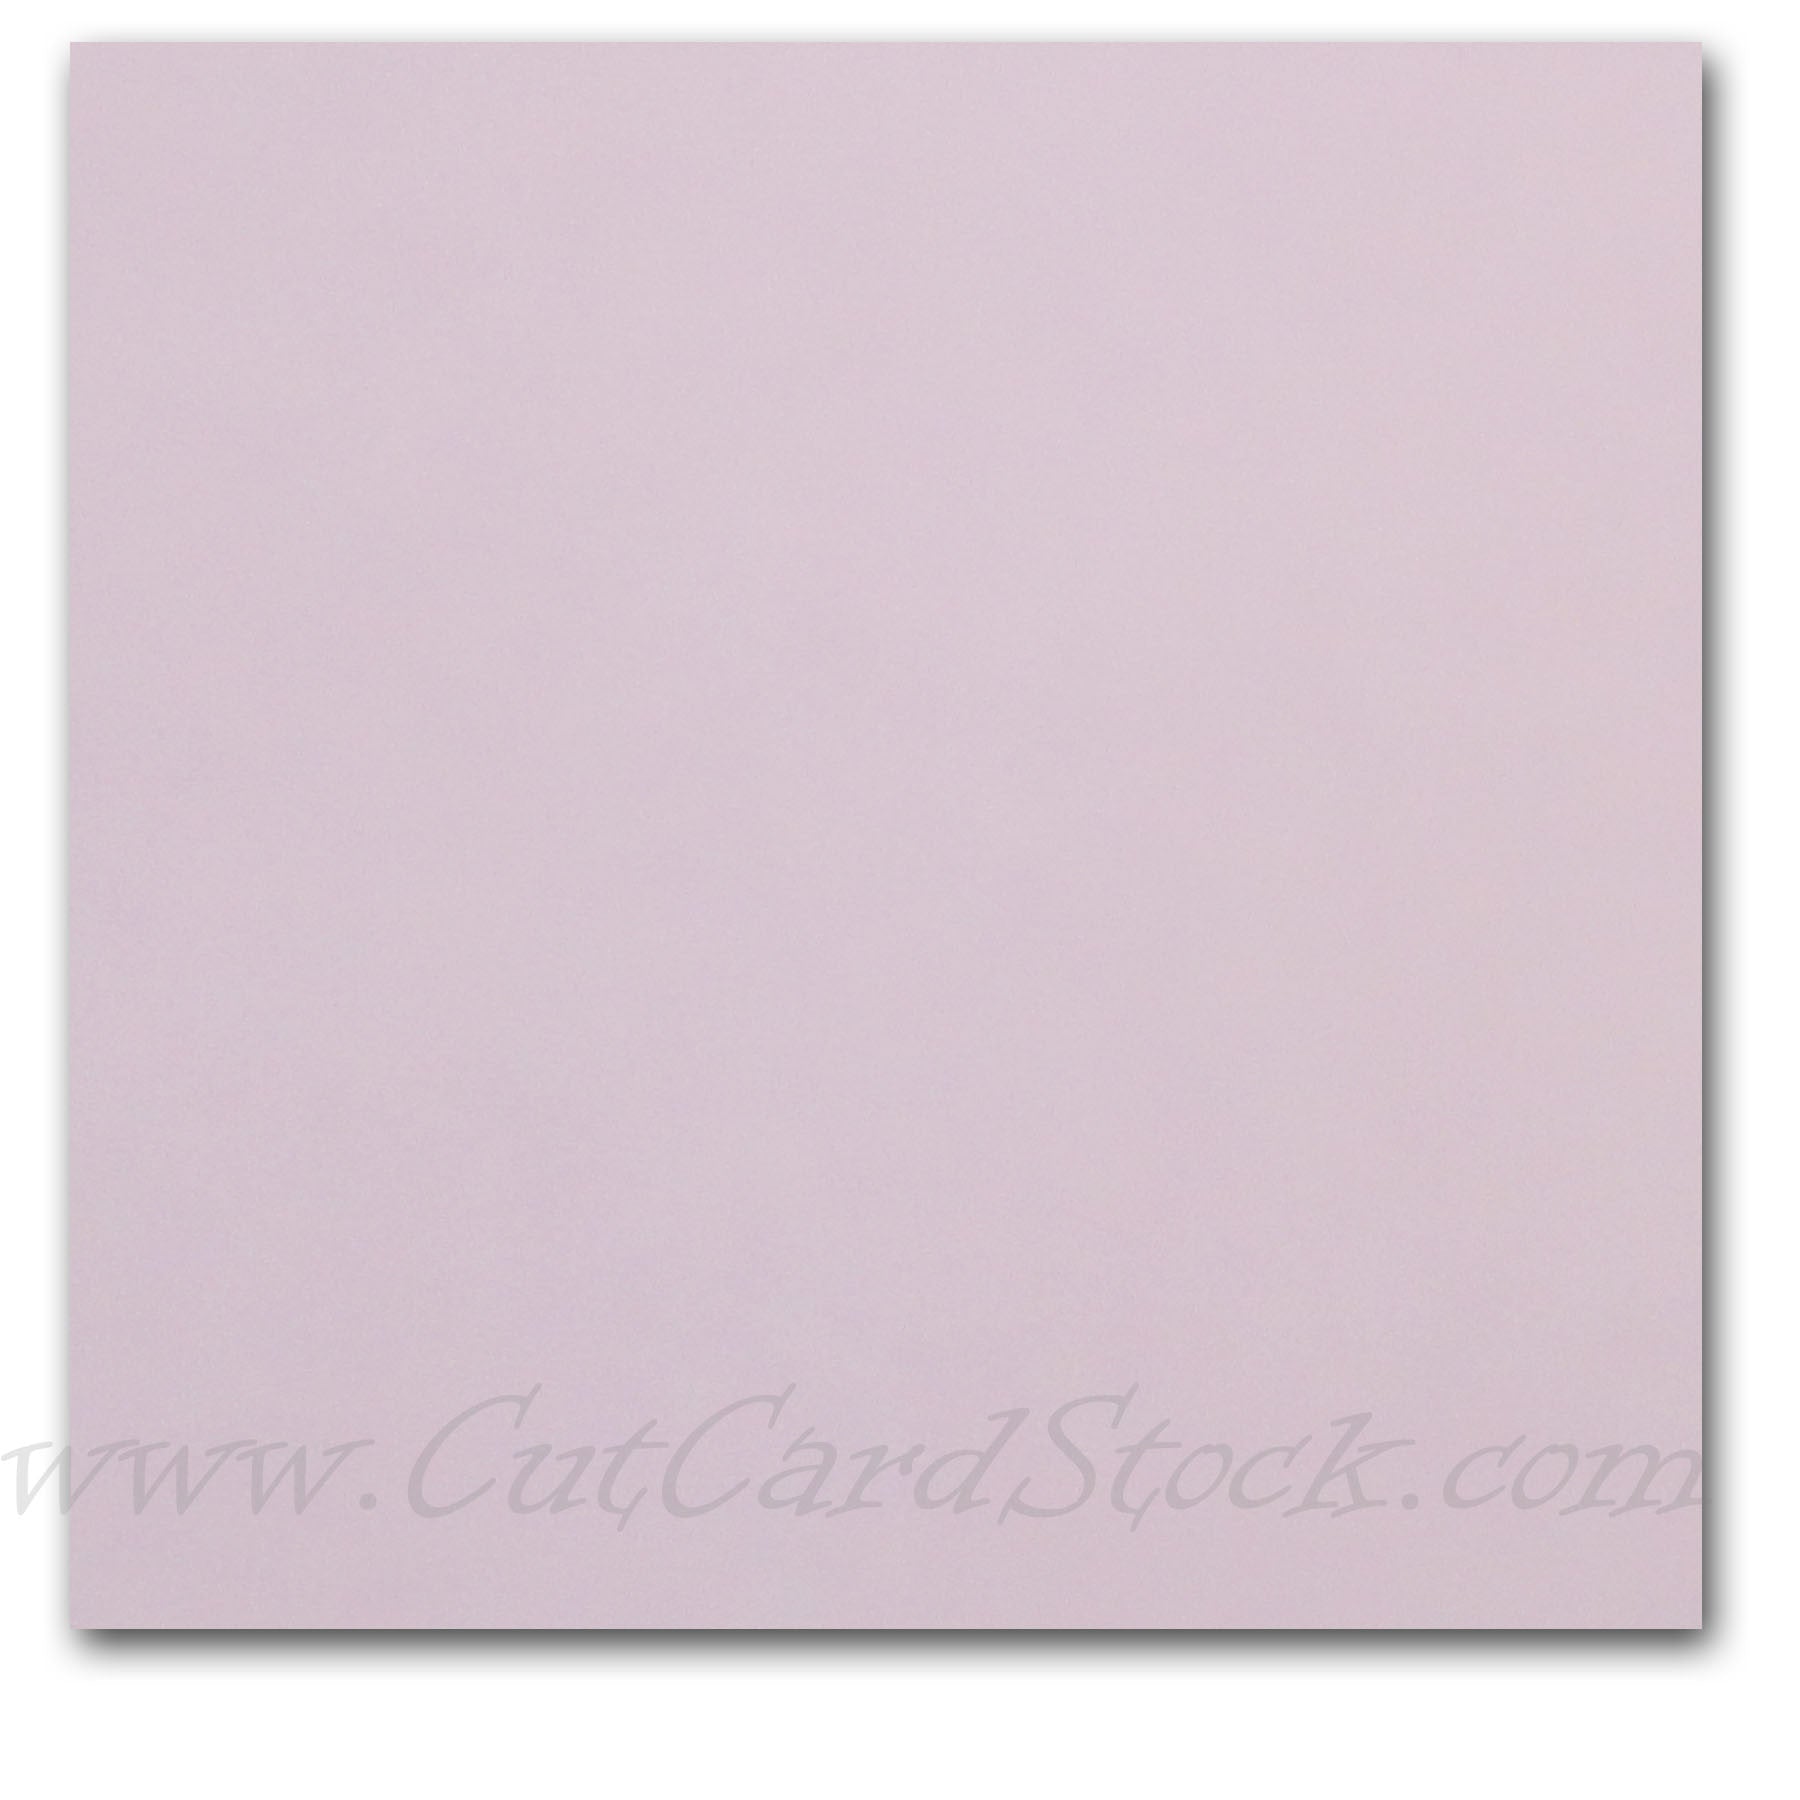 Springhill® Vellum Bristol Digital White 67 lb. Card Stock 11x17